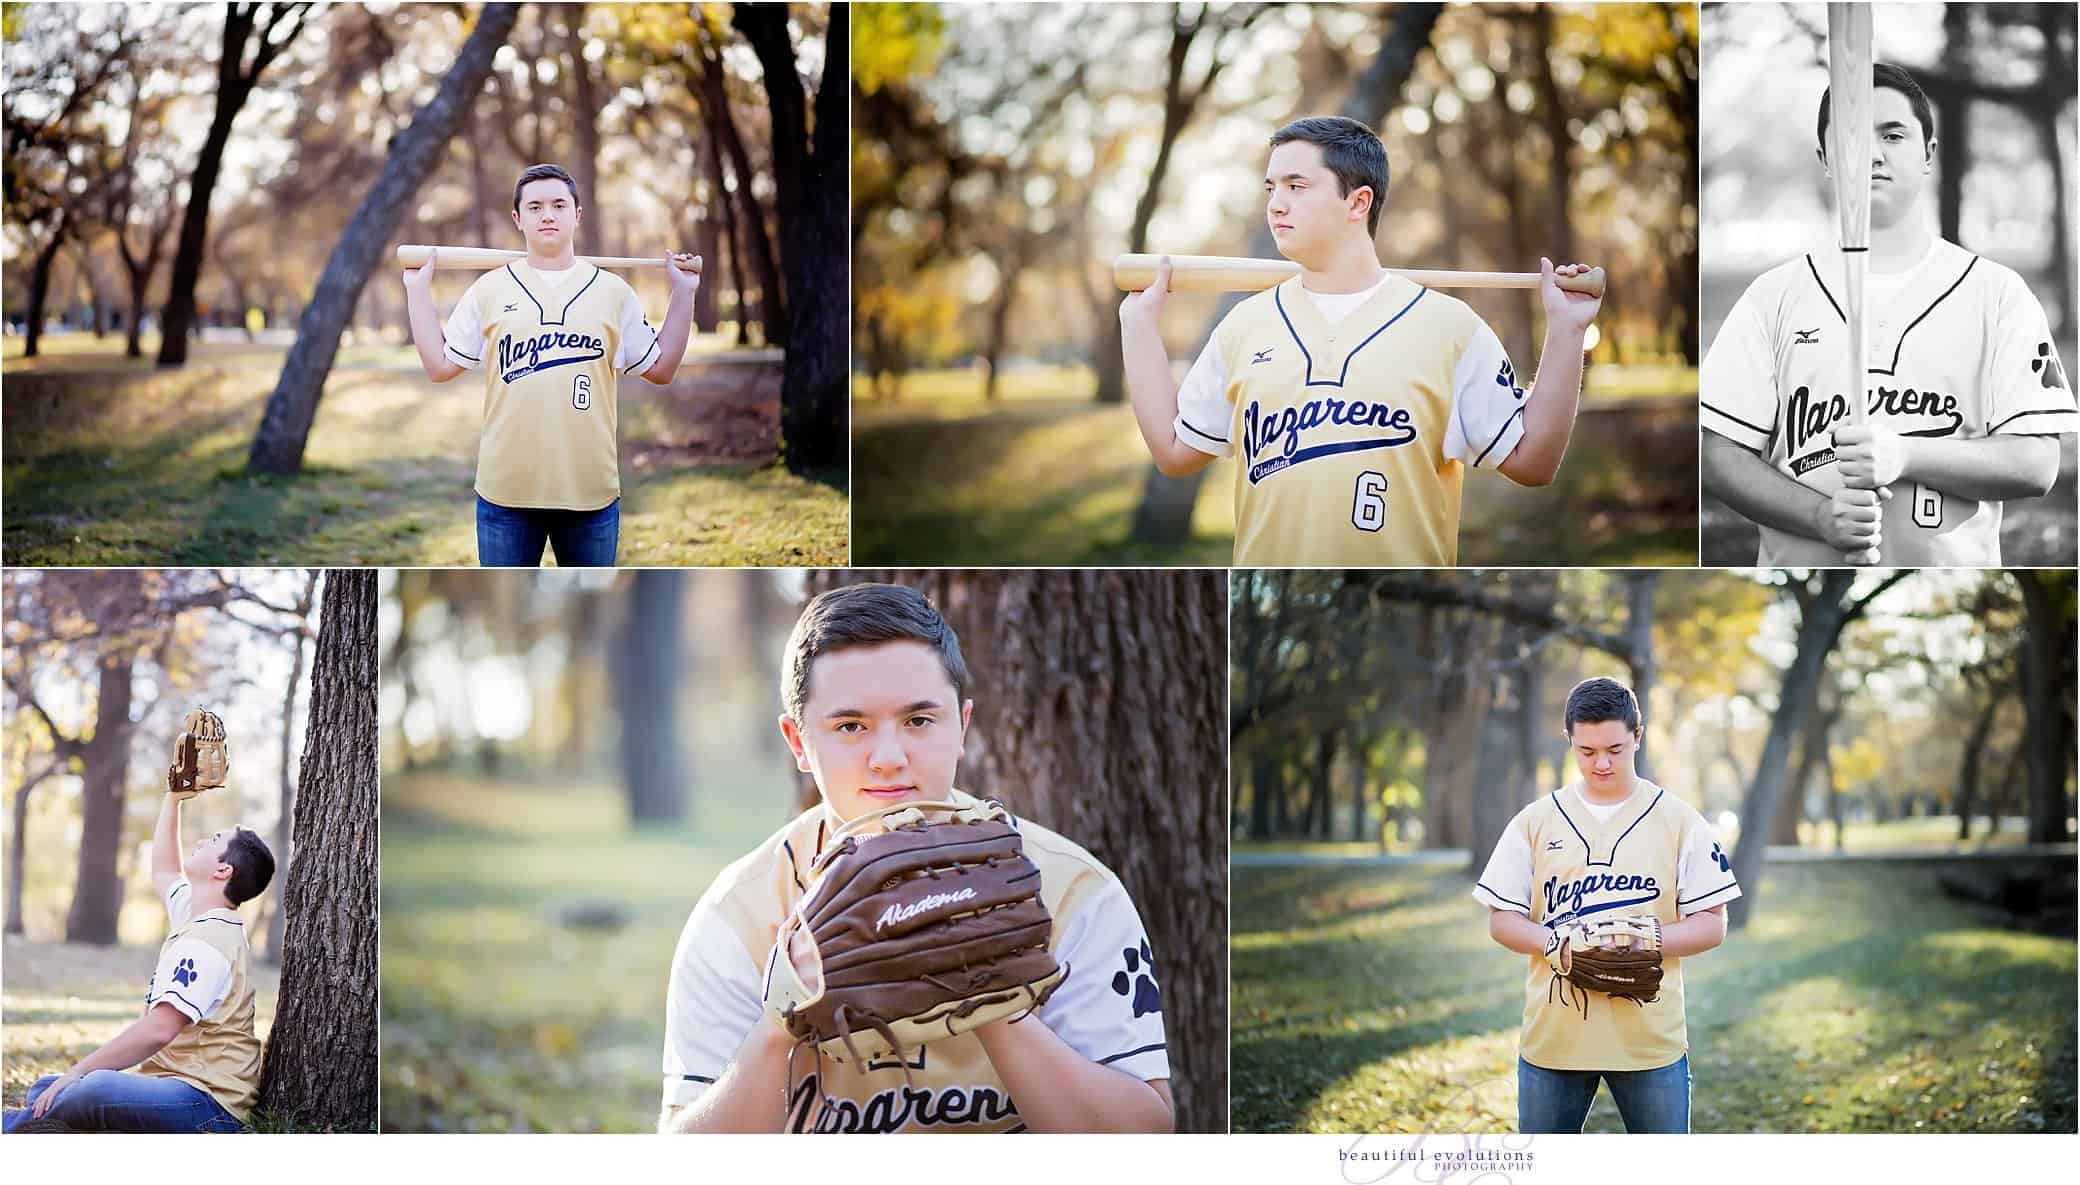 Senior Photographer Beautiful Evolutions 2018 baseball